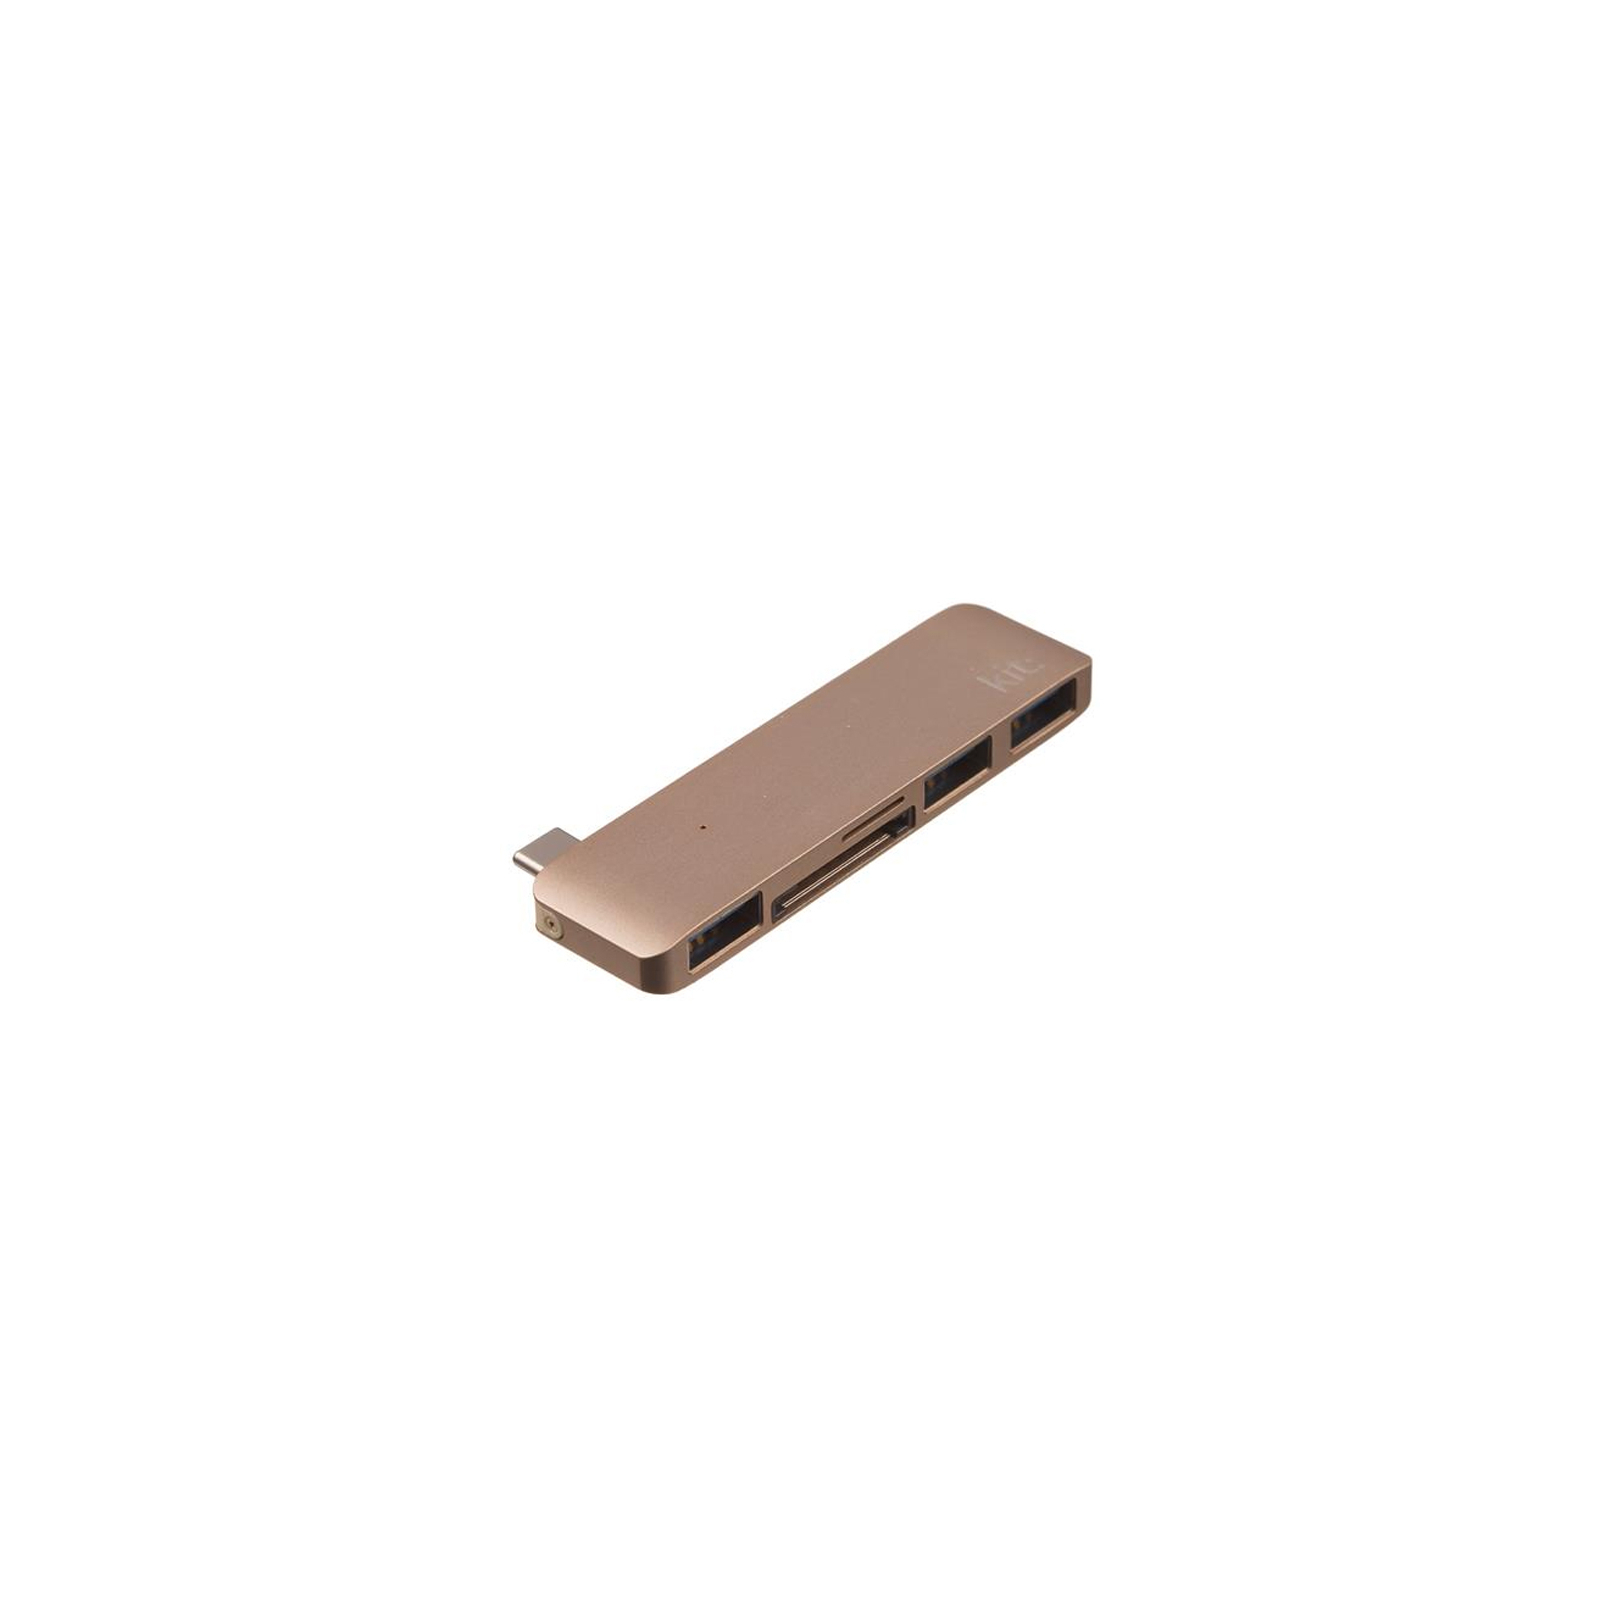 Переходник Type-C to 3*USB 3.0, SD/microSD reader (Gold) Kit (C5IN1GD)